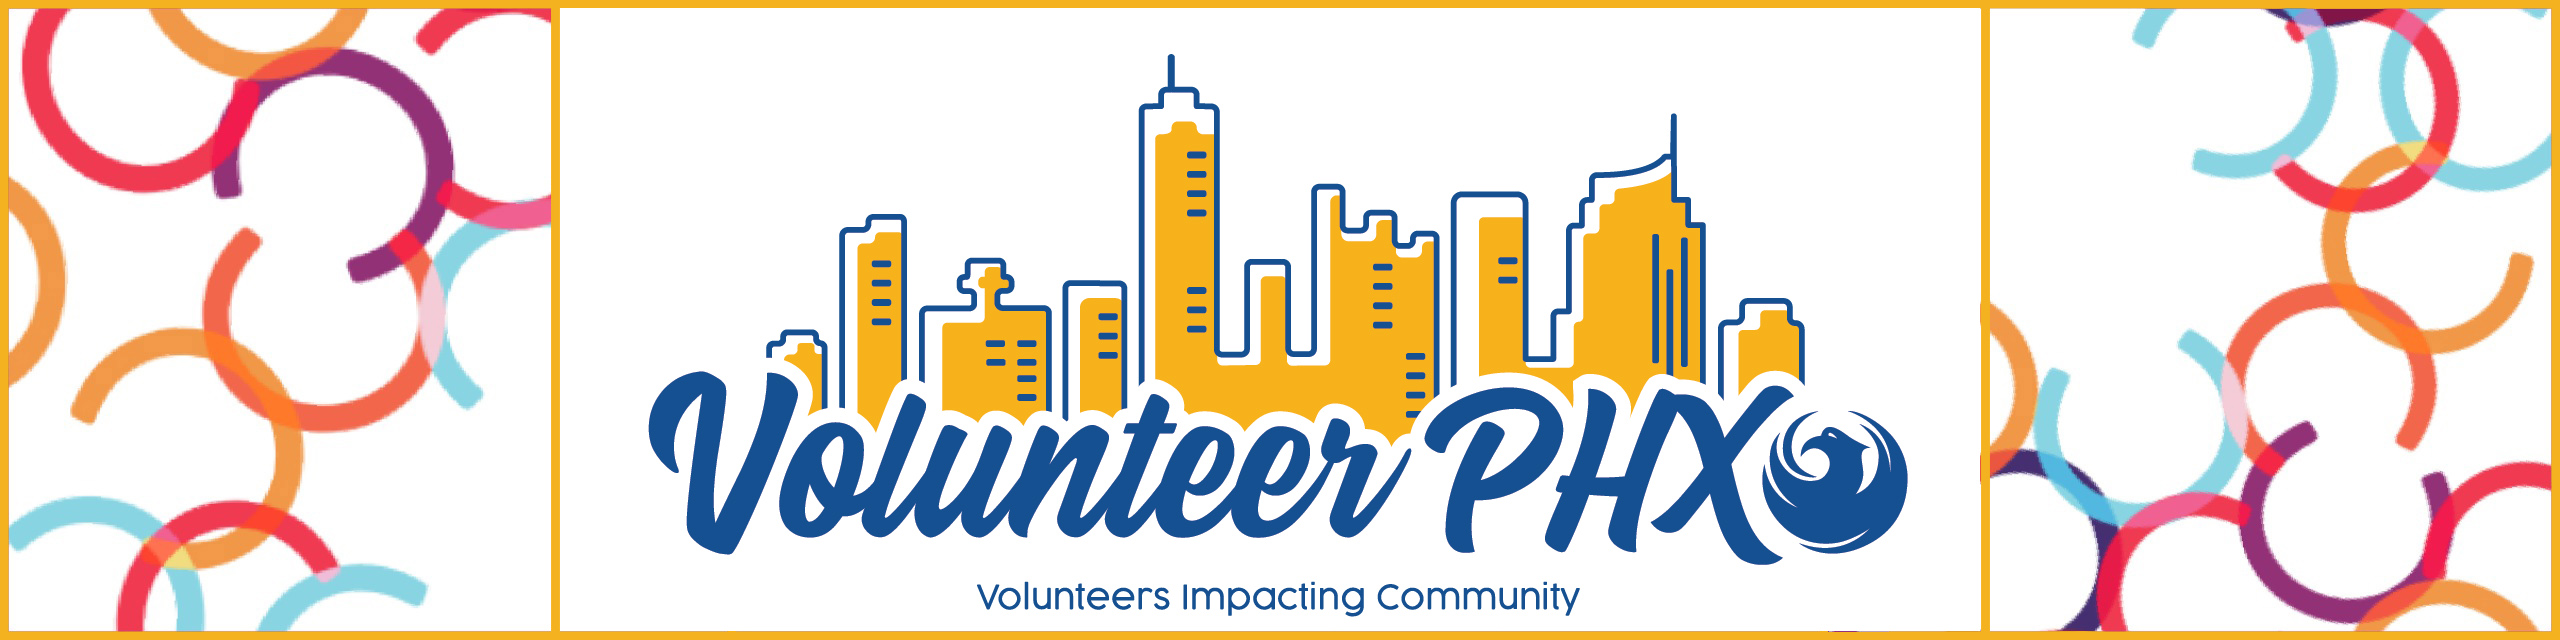 Volunteer PHX logo and banner